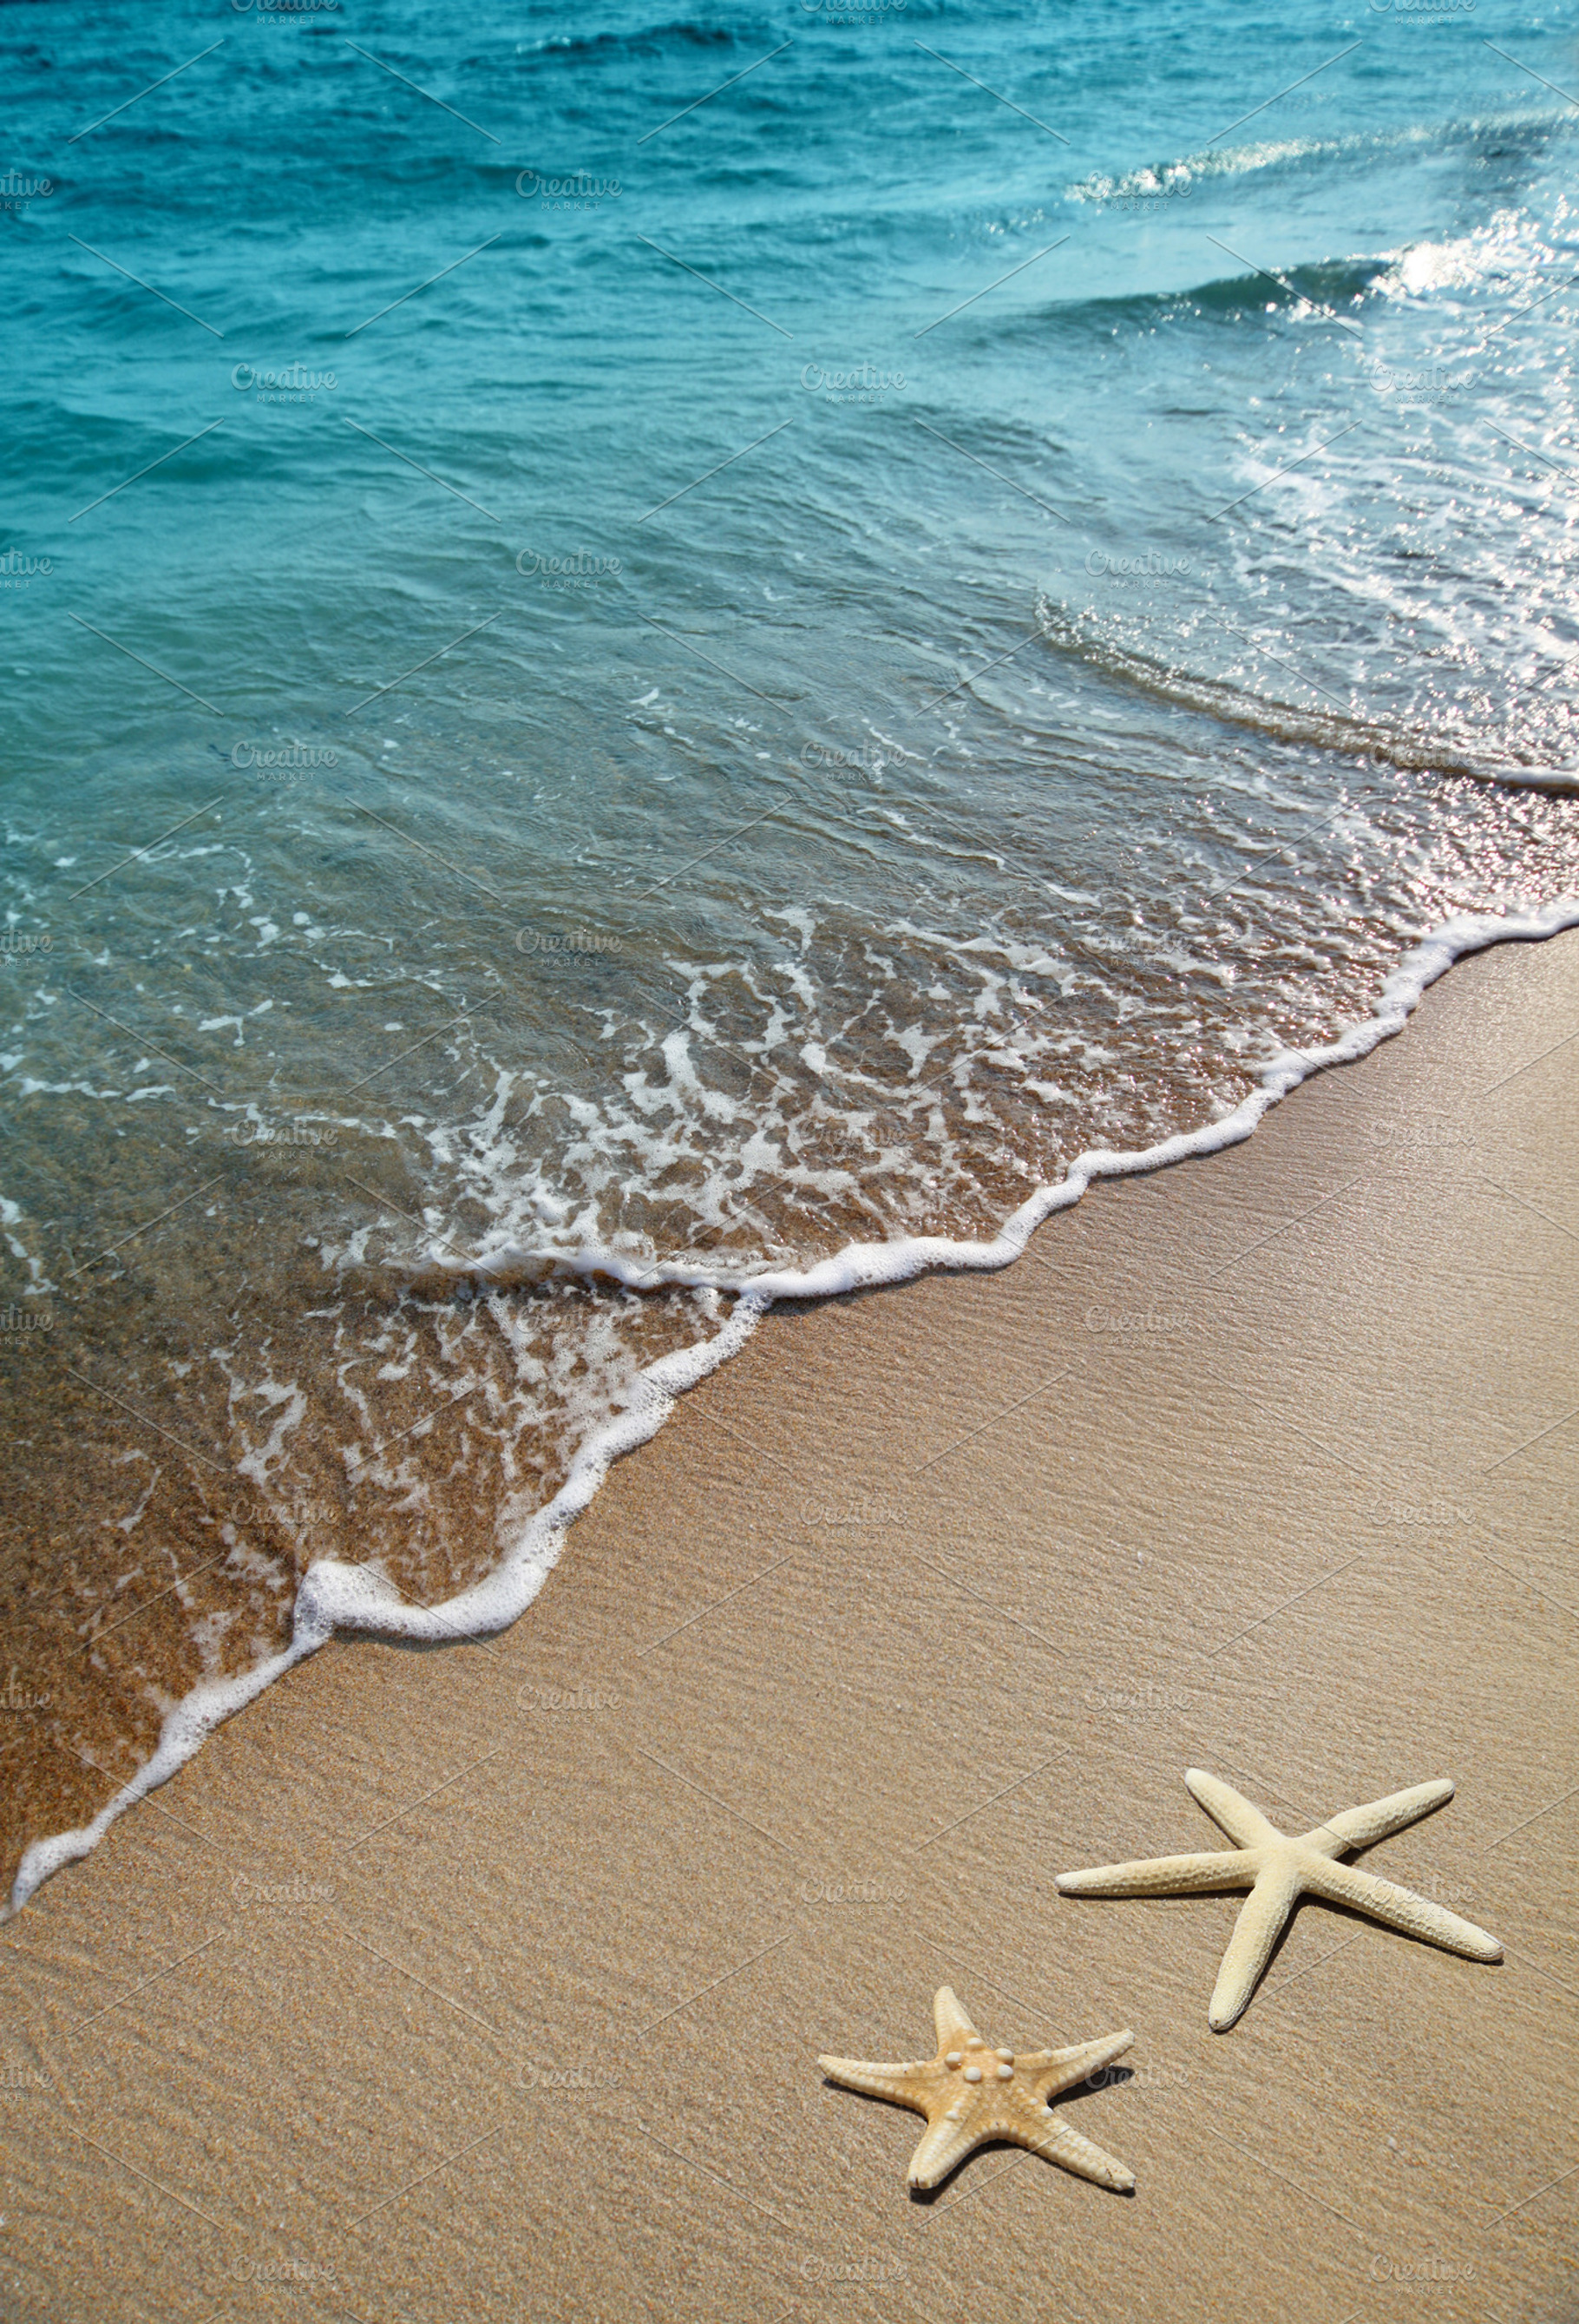 two starfish on a beach | High-Quality Stock Photos ~ Creative Market